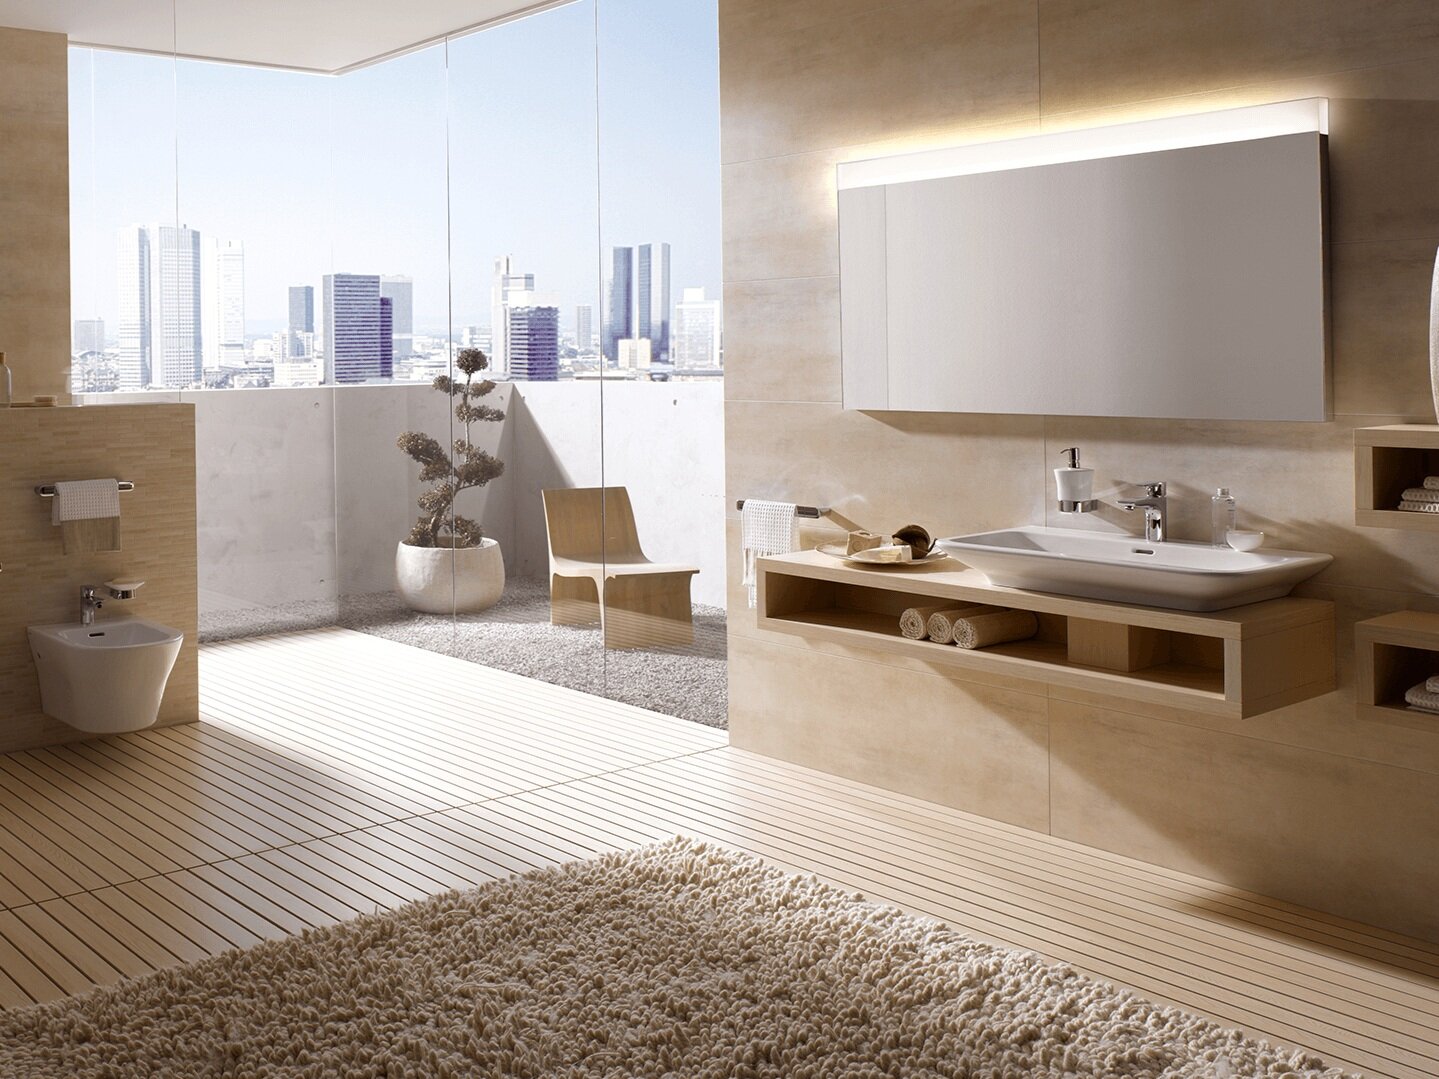 Toto_Luxury-bathroom-bidet.jpg